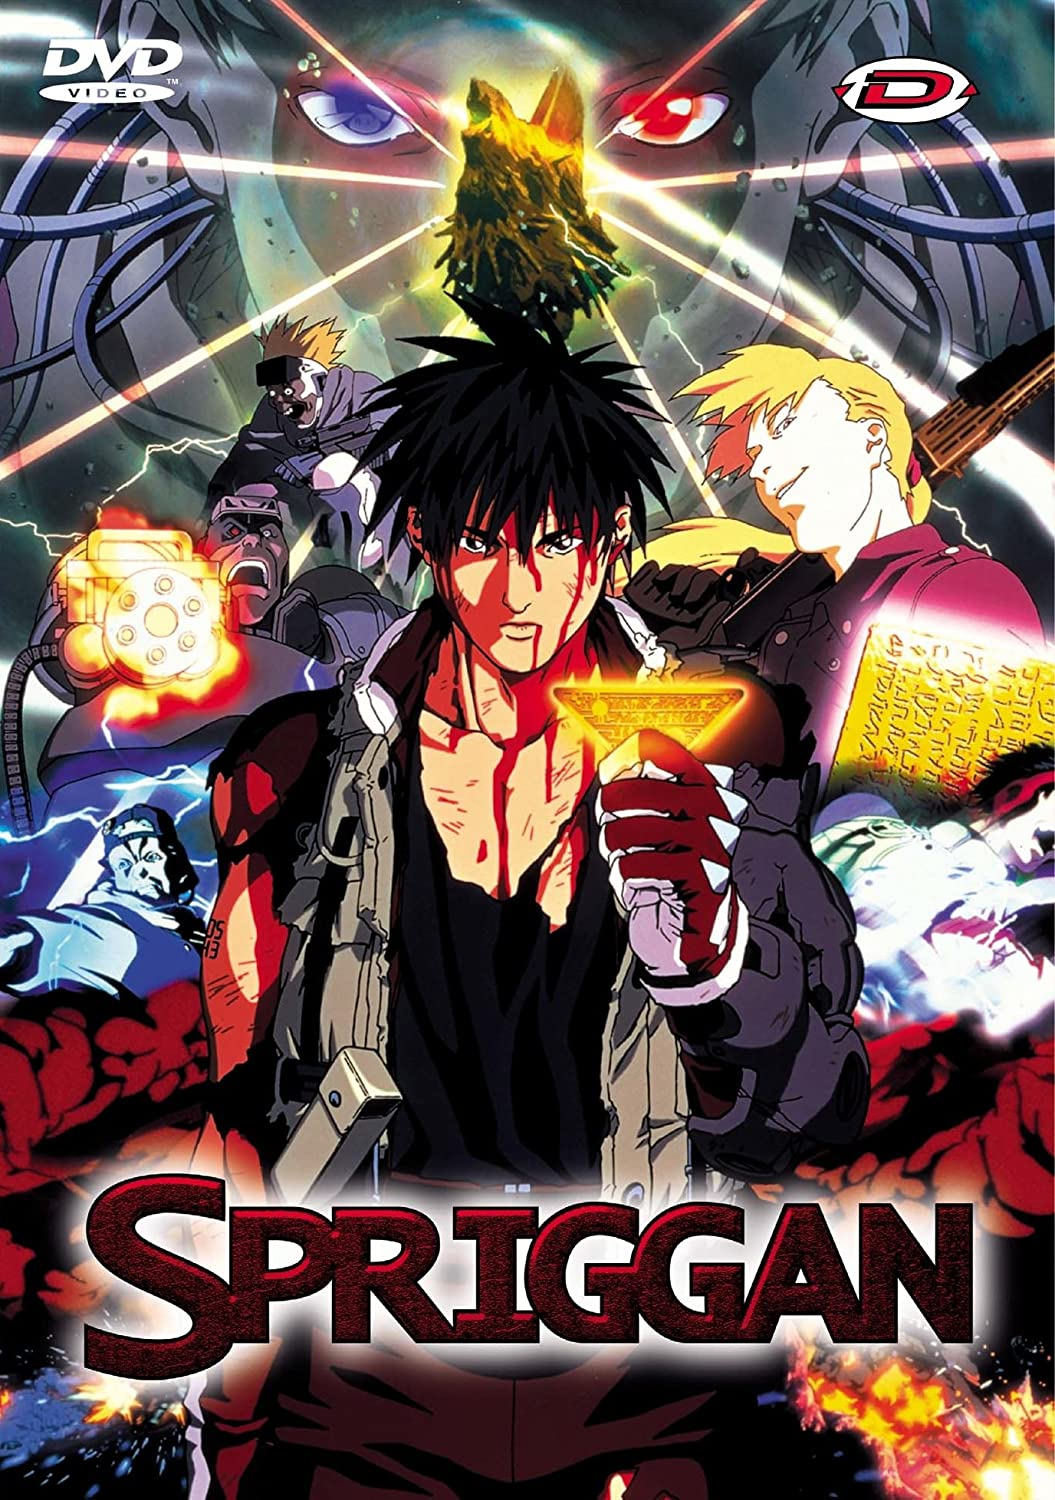 Spriggan anime Season 1 available now on Netflix - is it a faithful  adaptation?